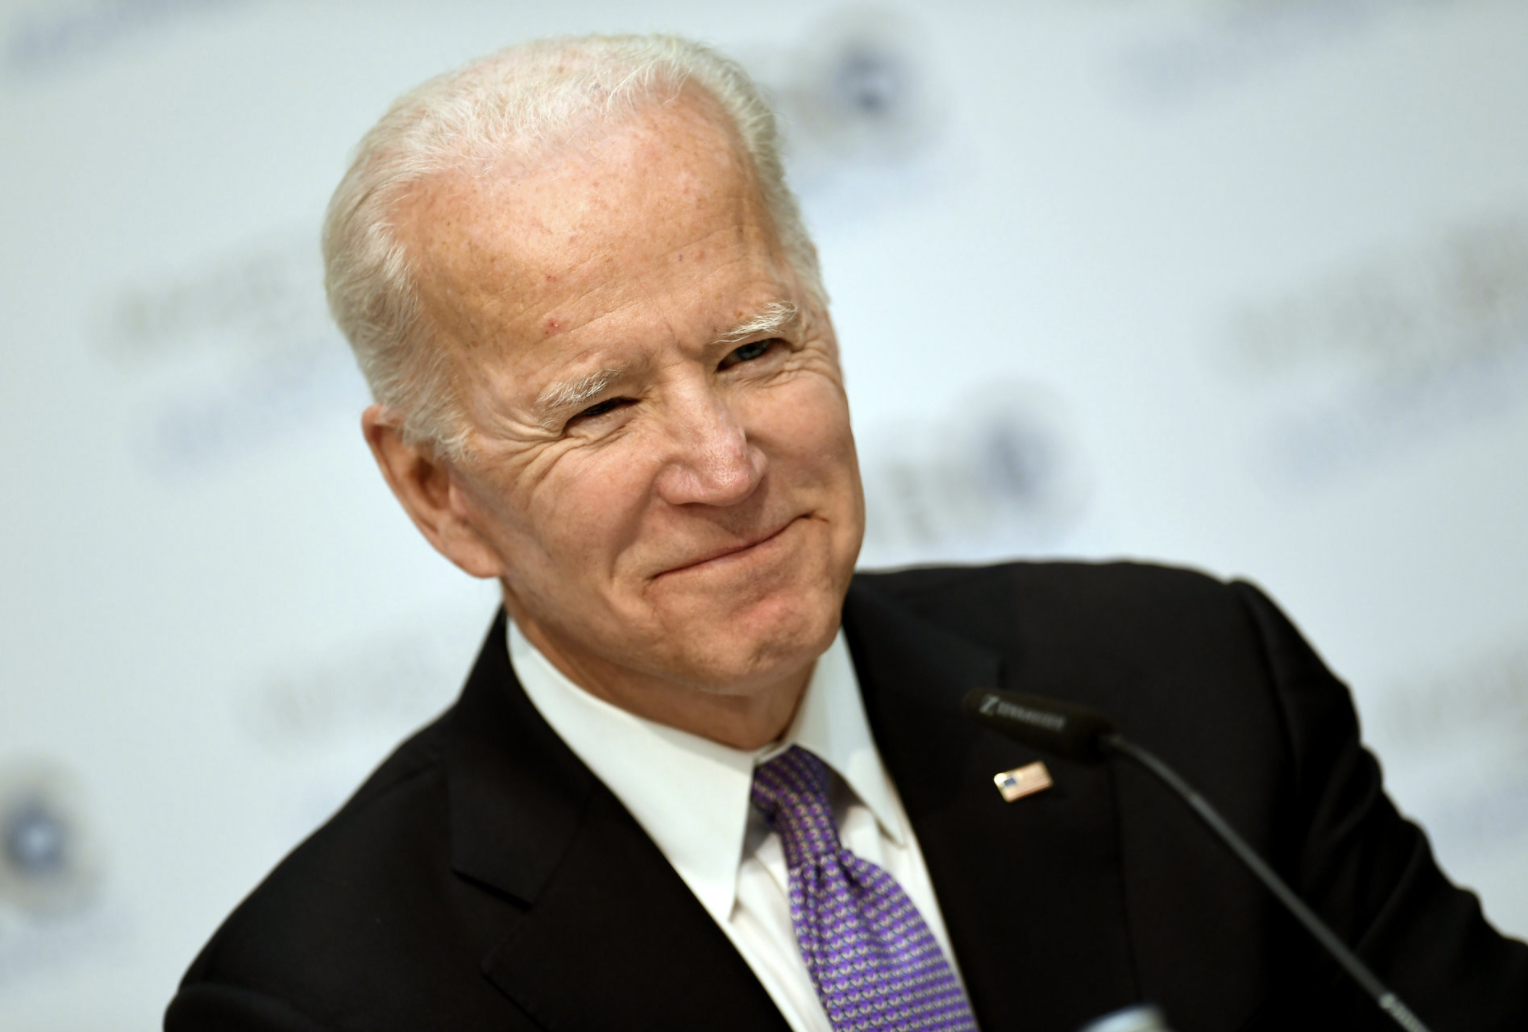 Biden pushes for 'assault weapons' ban